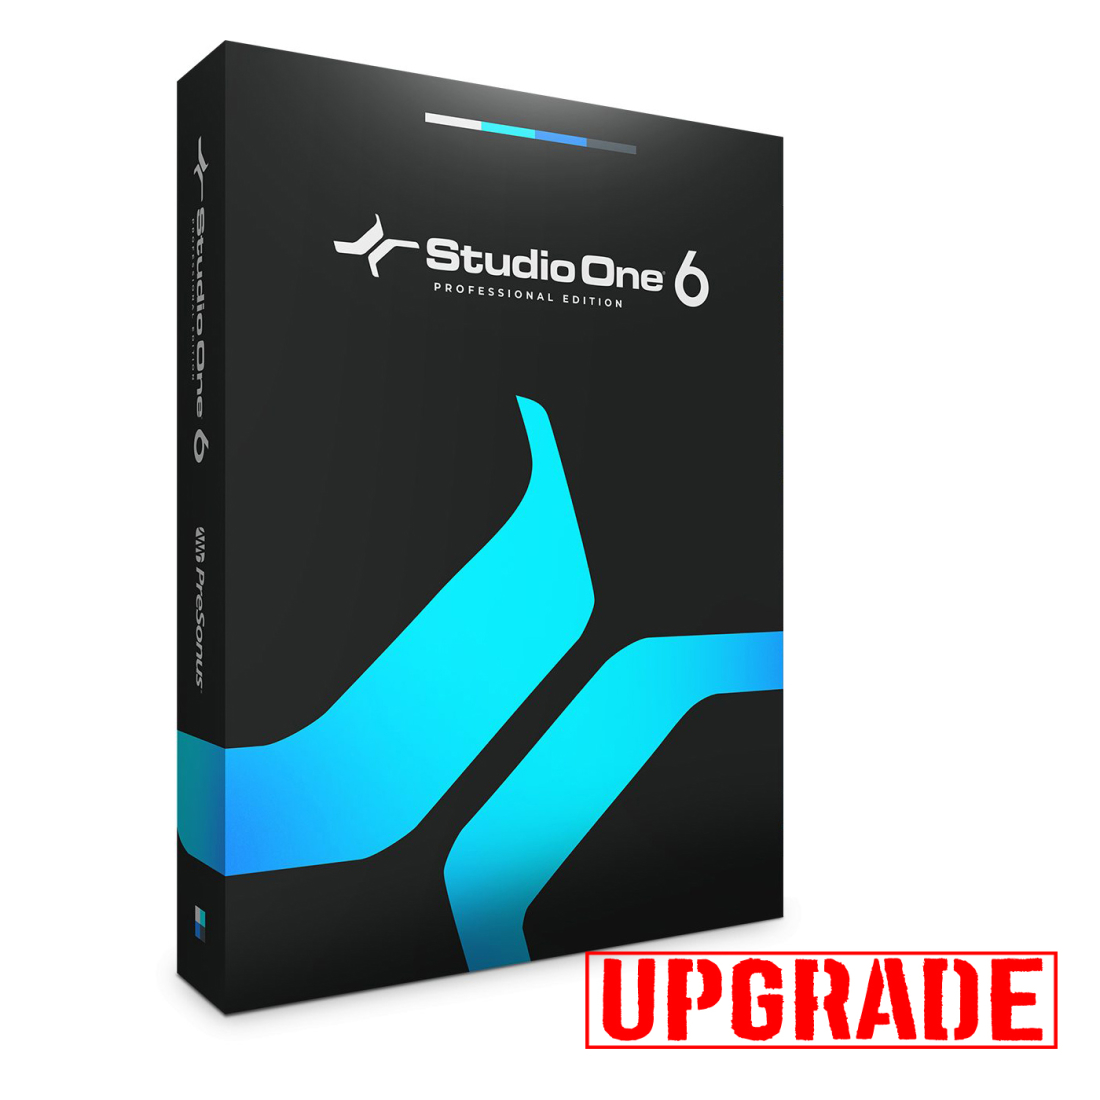 Studio One 6 Artist Edition to Studio One 6 Professional Edition, Upgrade - Download